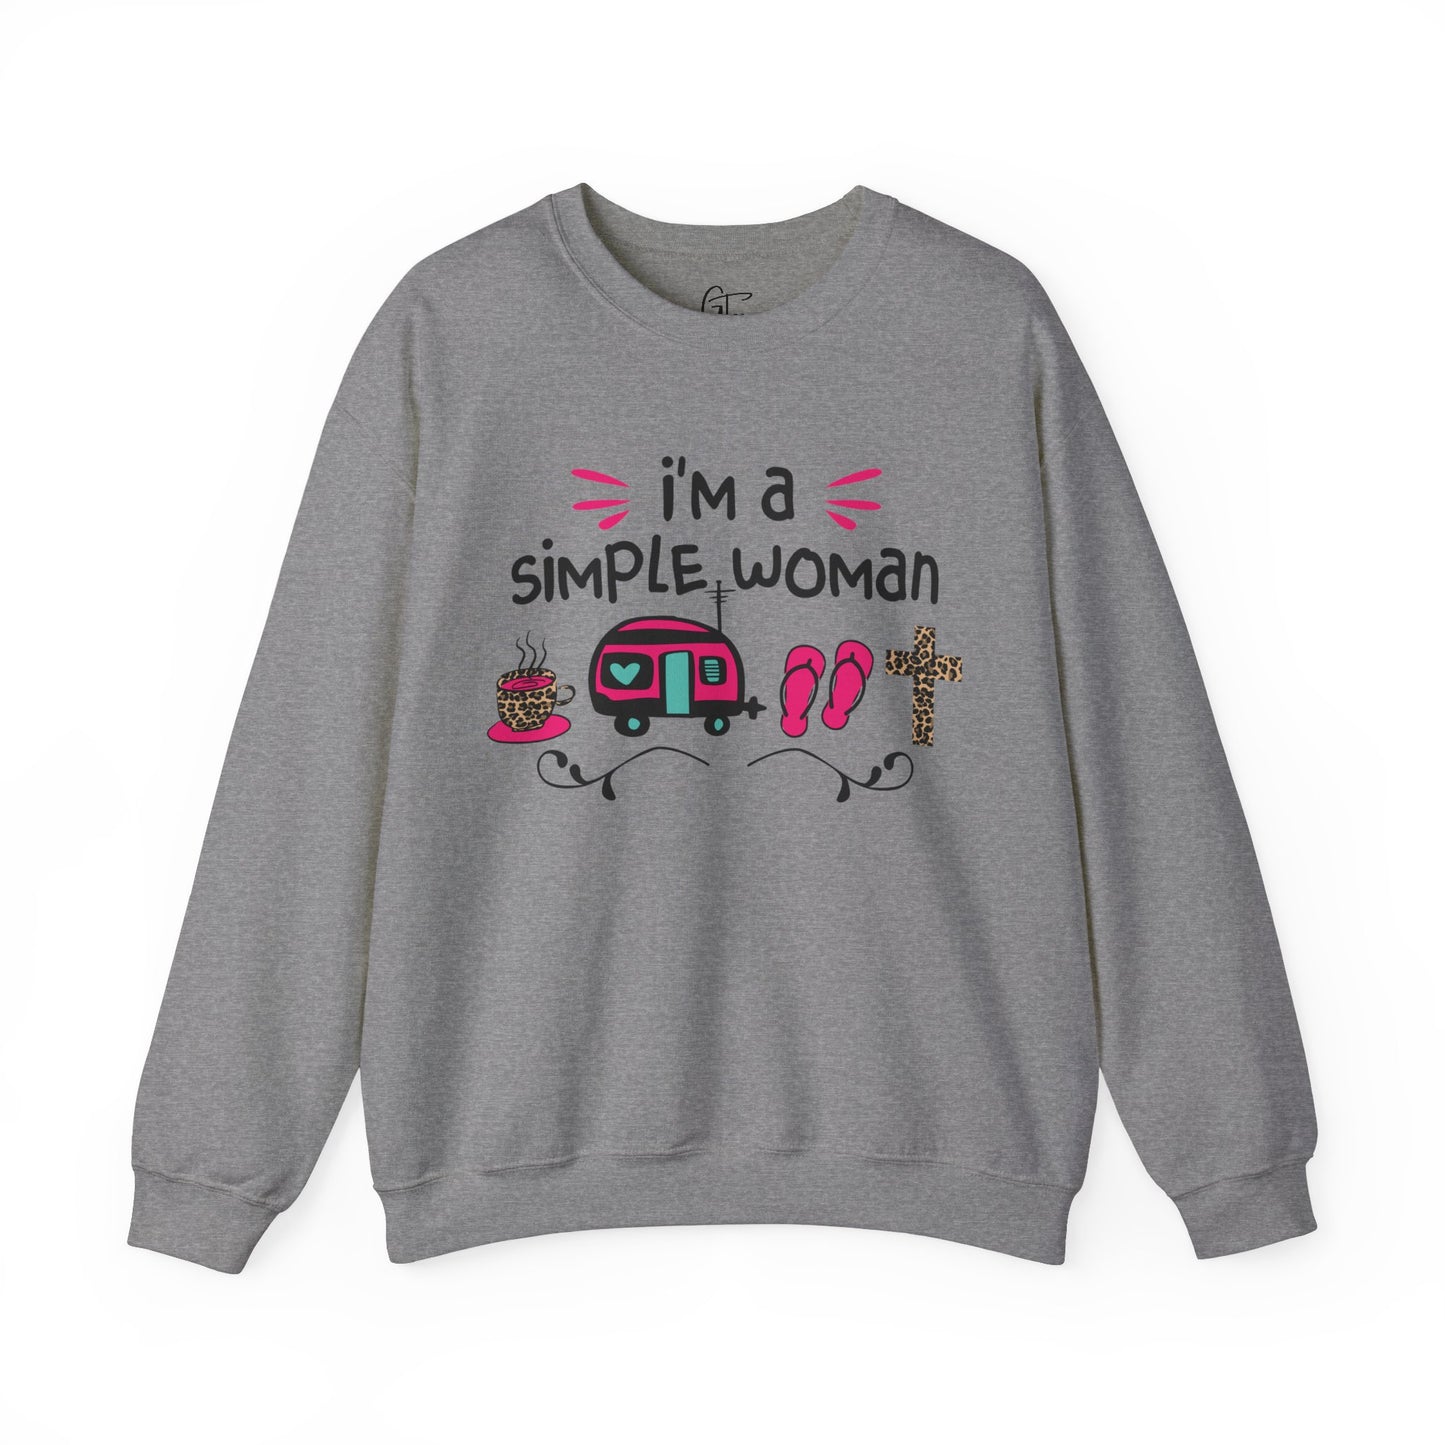 I'm a Simple Woman Sweatshirt